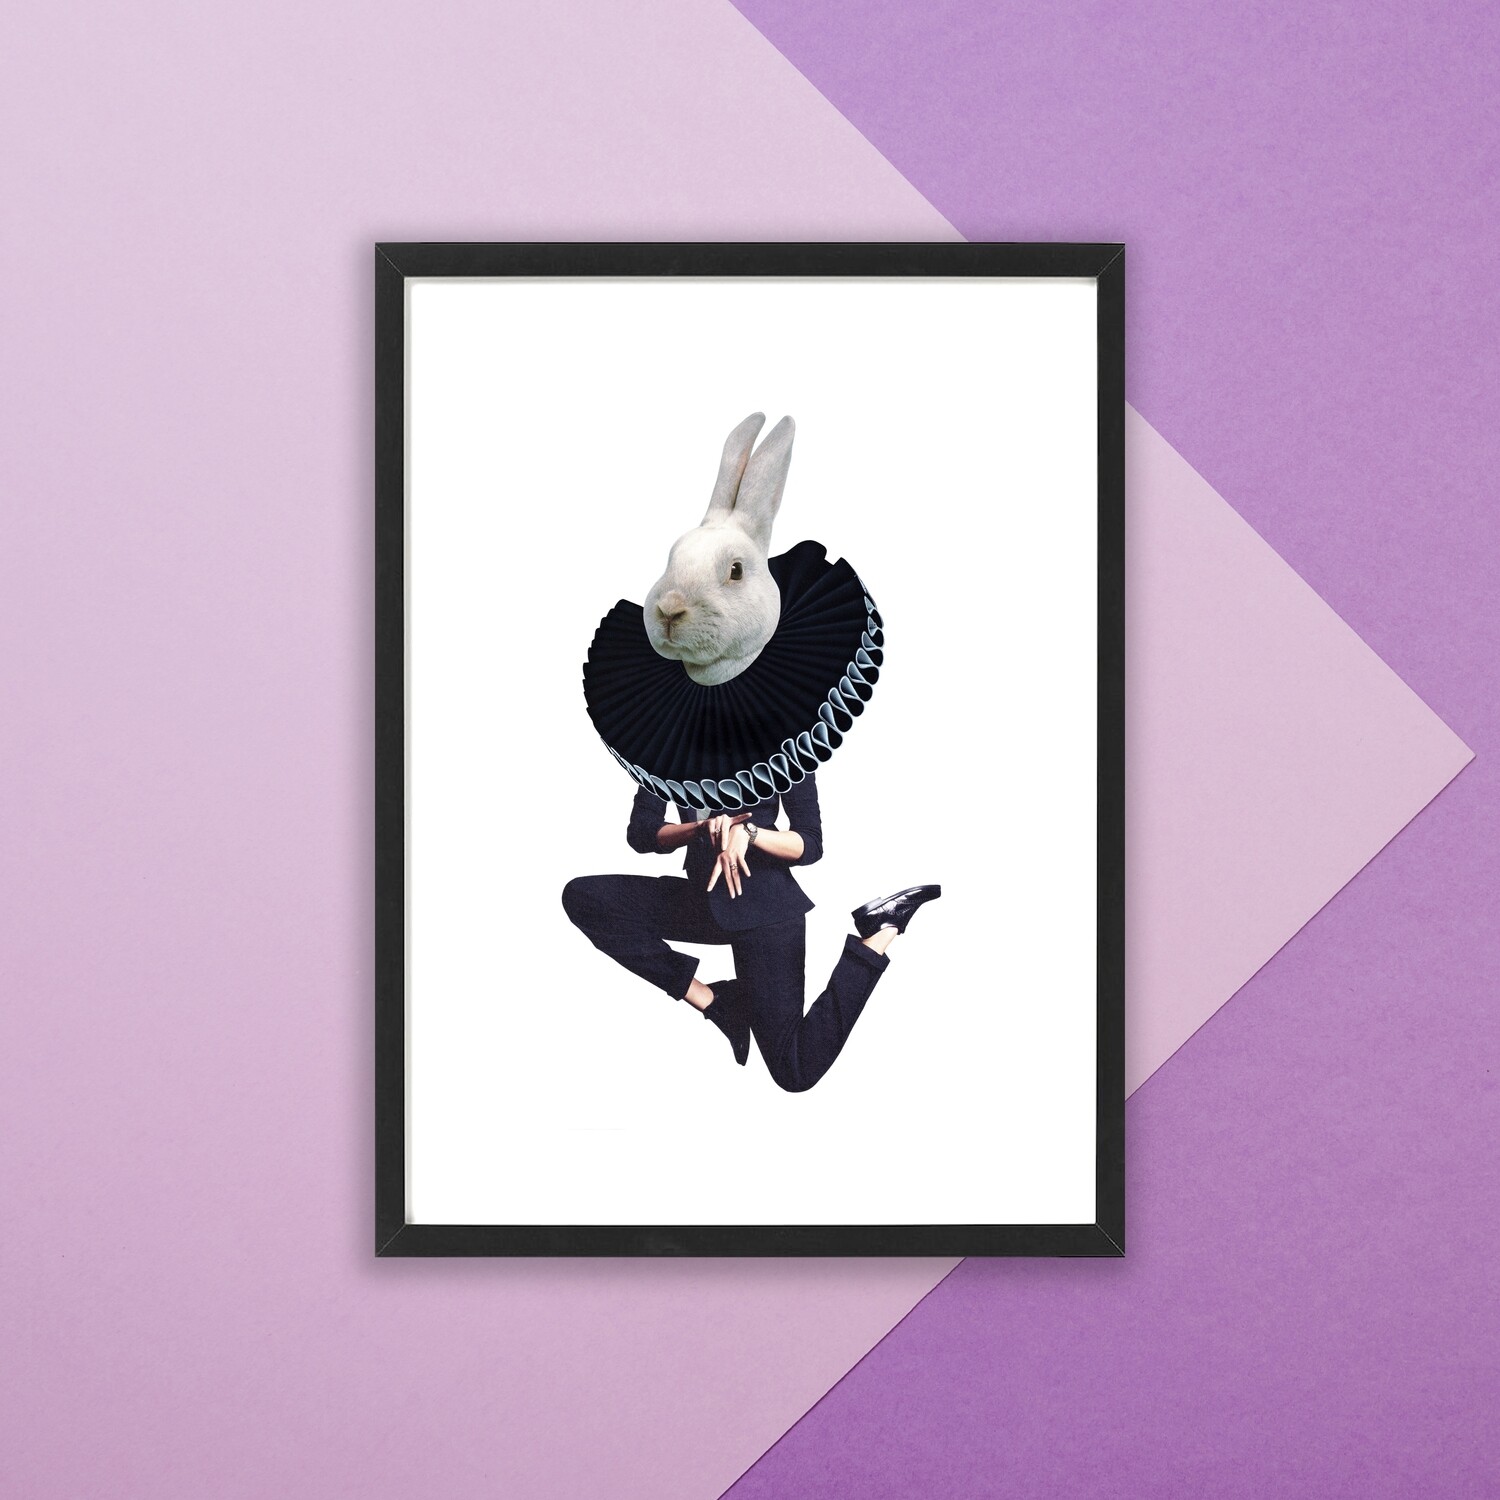 White rabbit - I'm late | original handmade collage